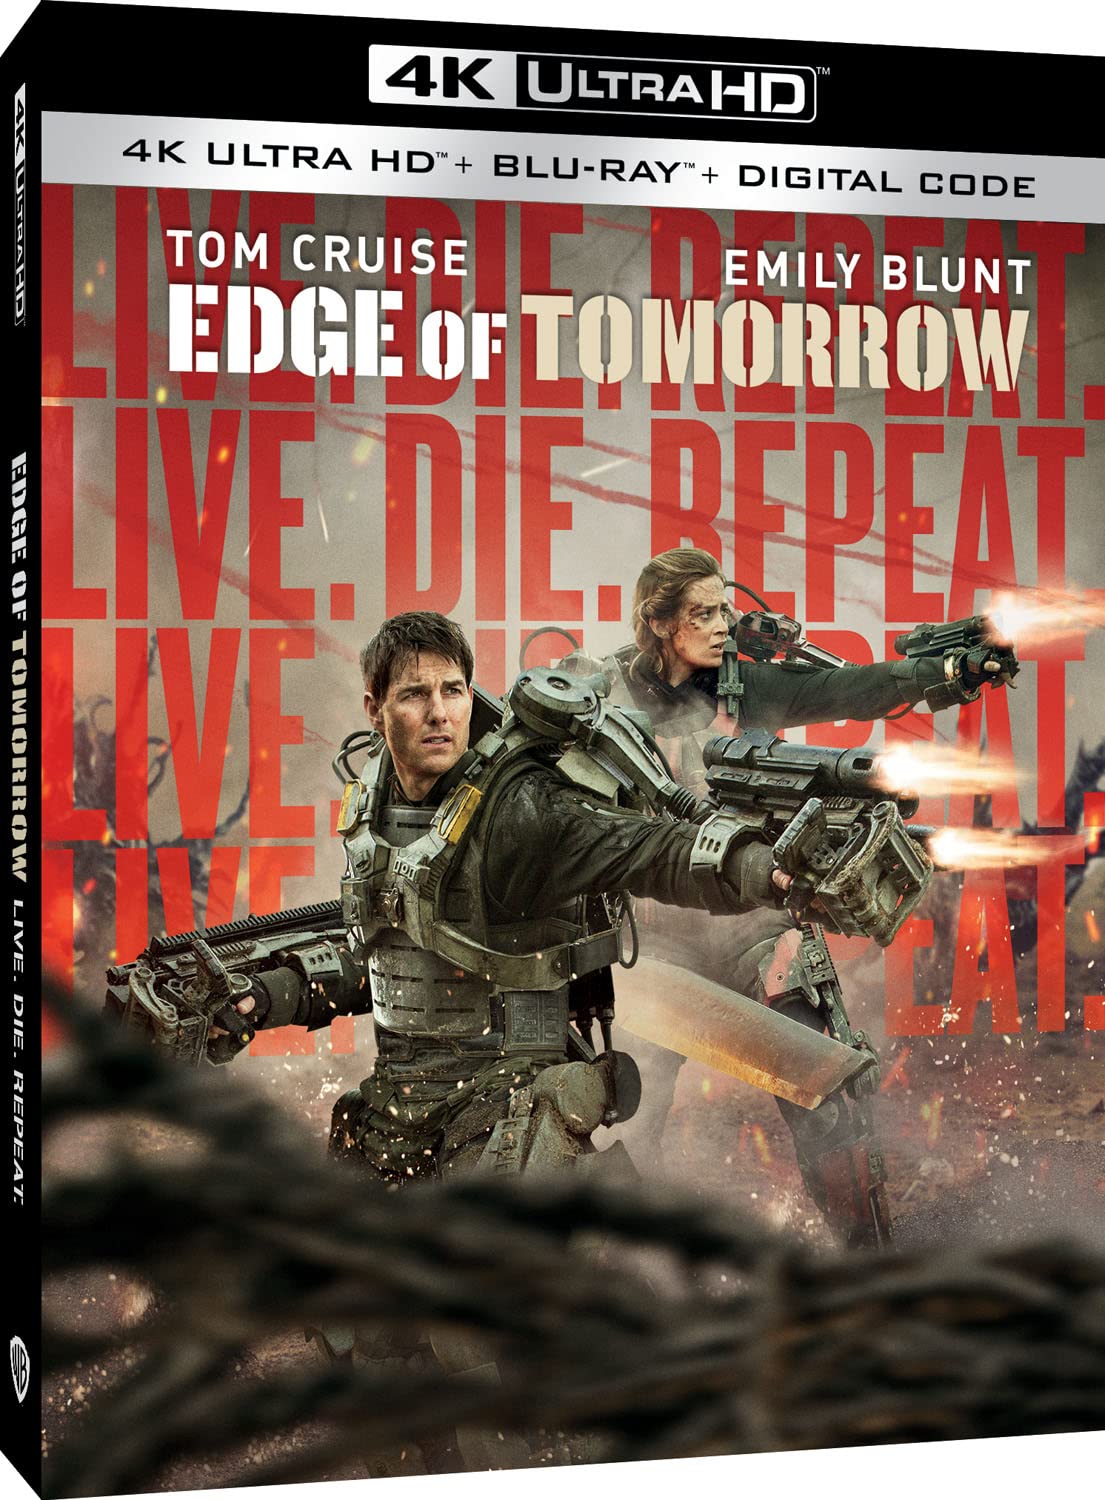 Live Die Repeat- Edge of Tomorrow 4k Blu-ray 2022 back